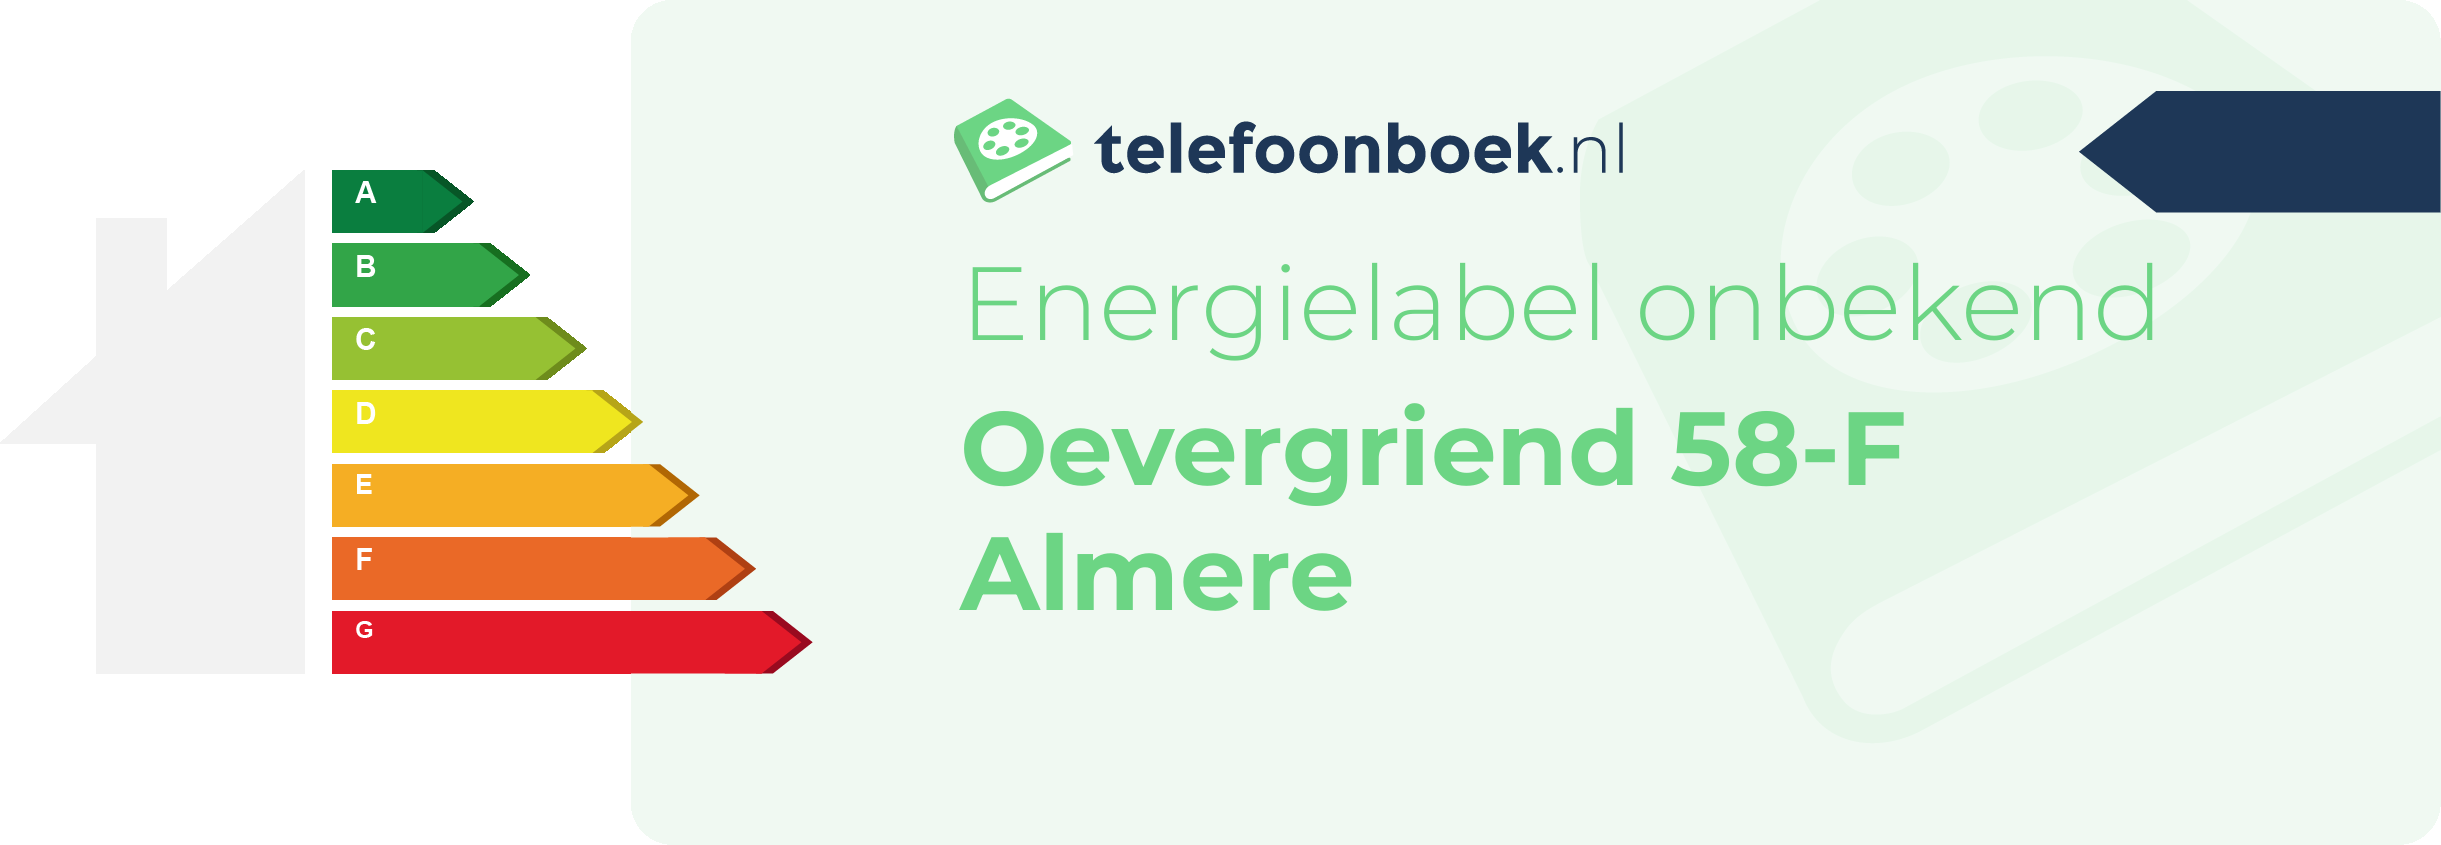 Energielabel Oevergriend 58-F Almere